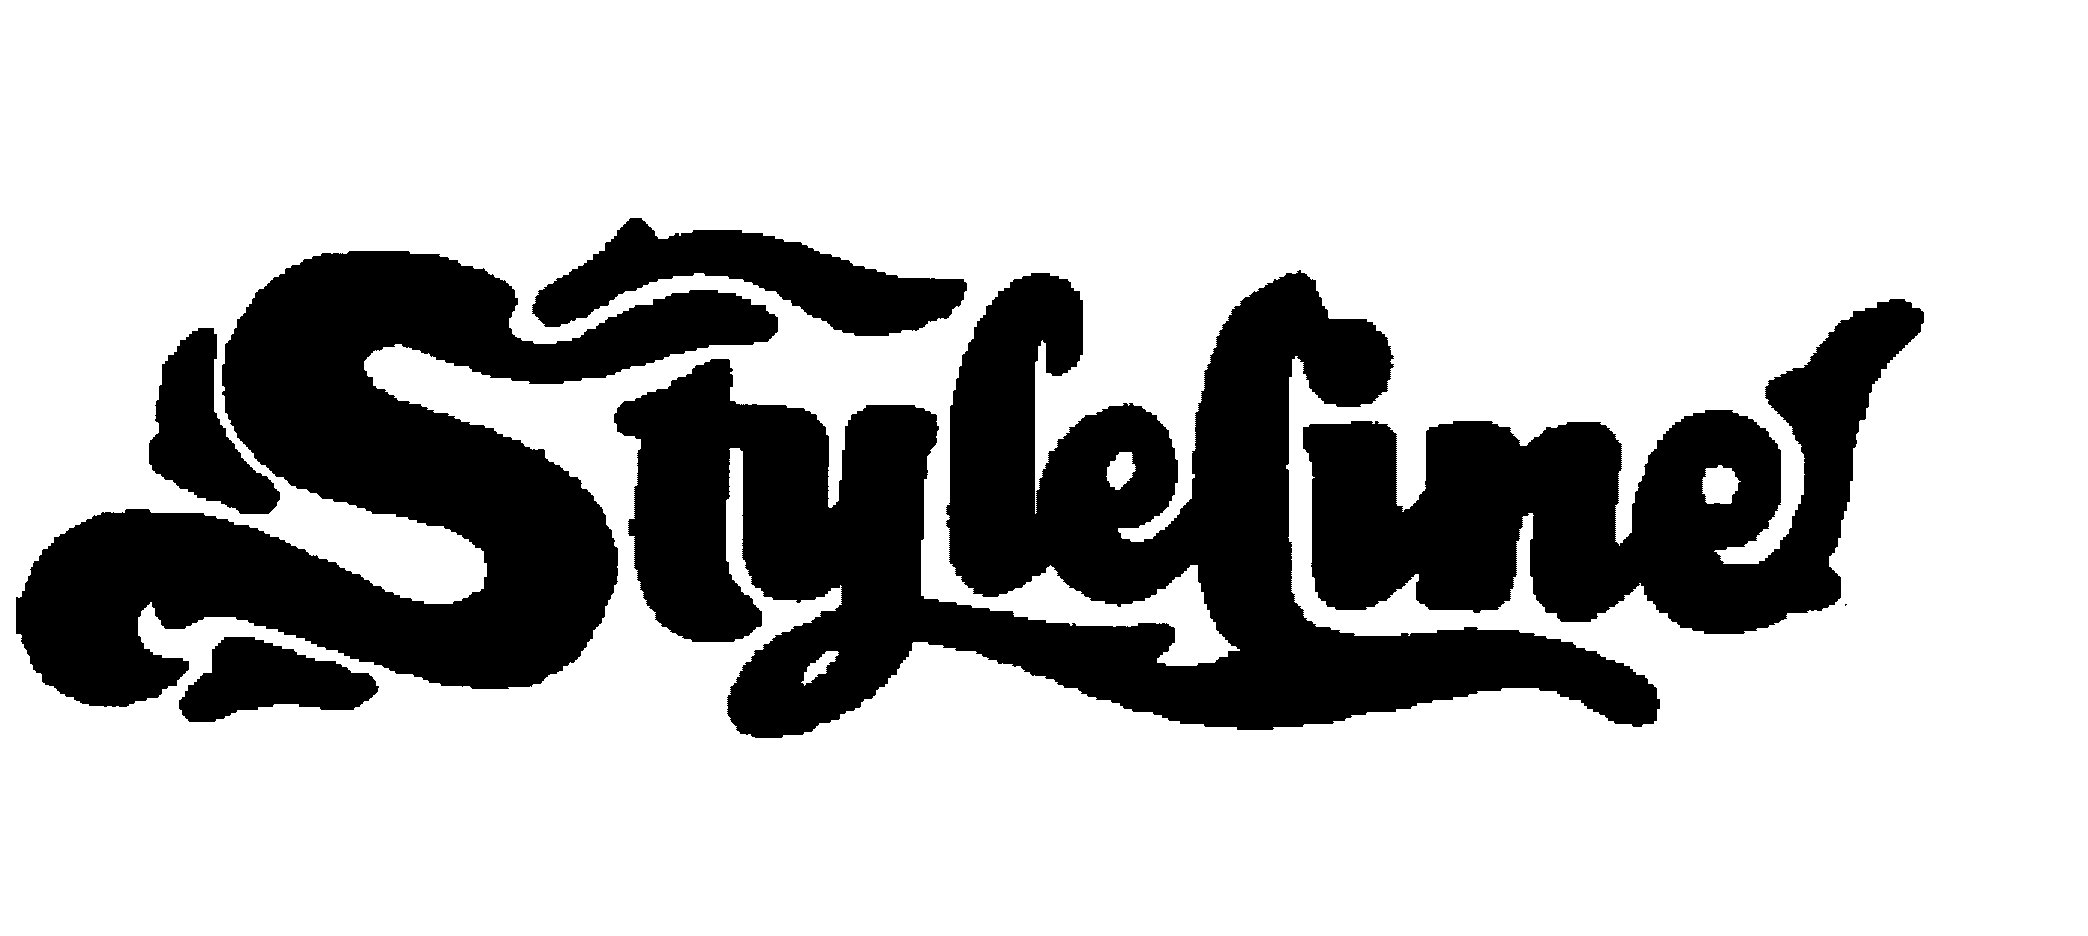 Trademark Logo STYLELINE